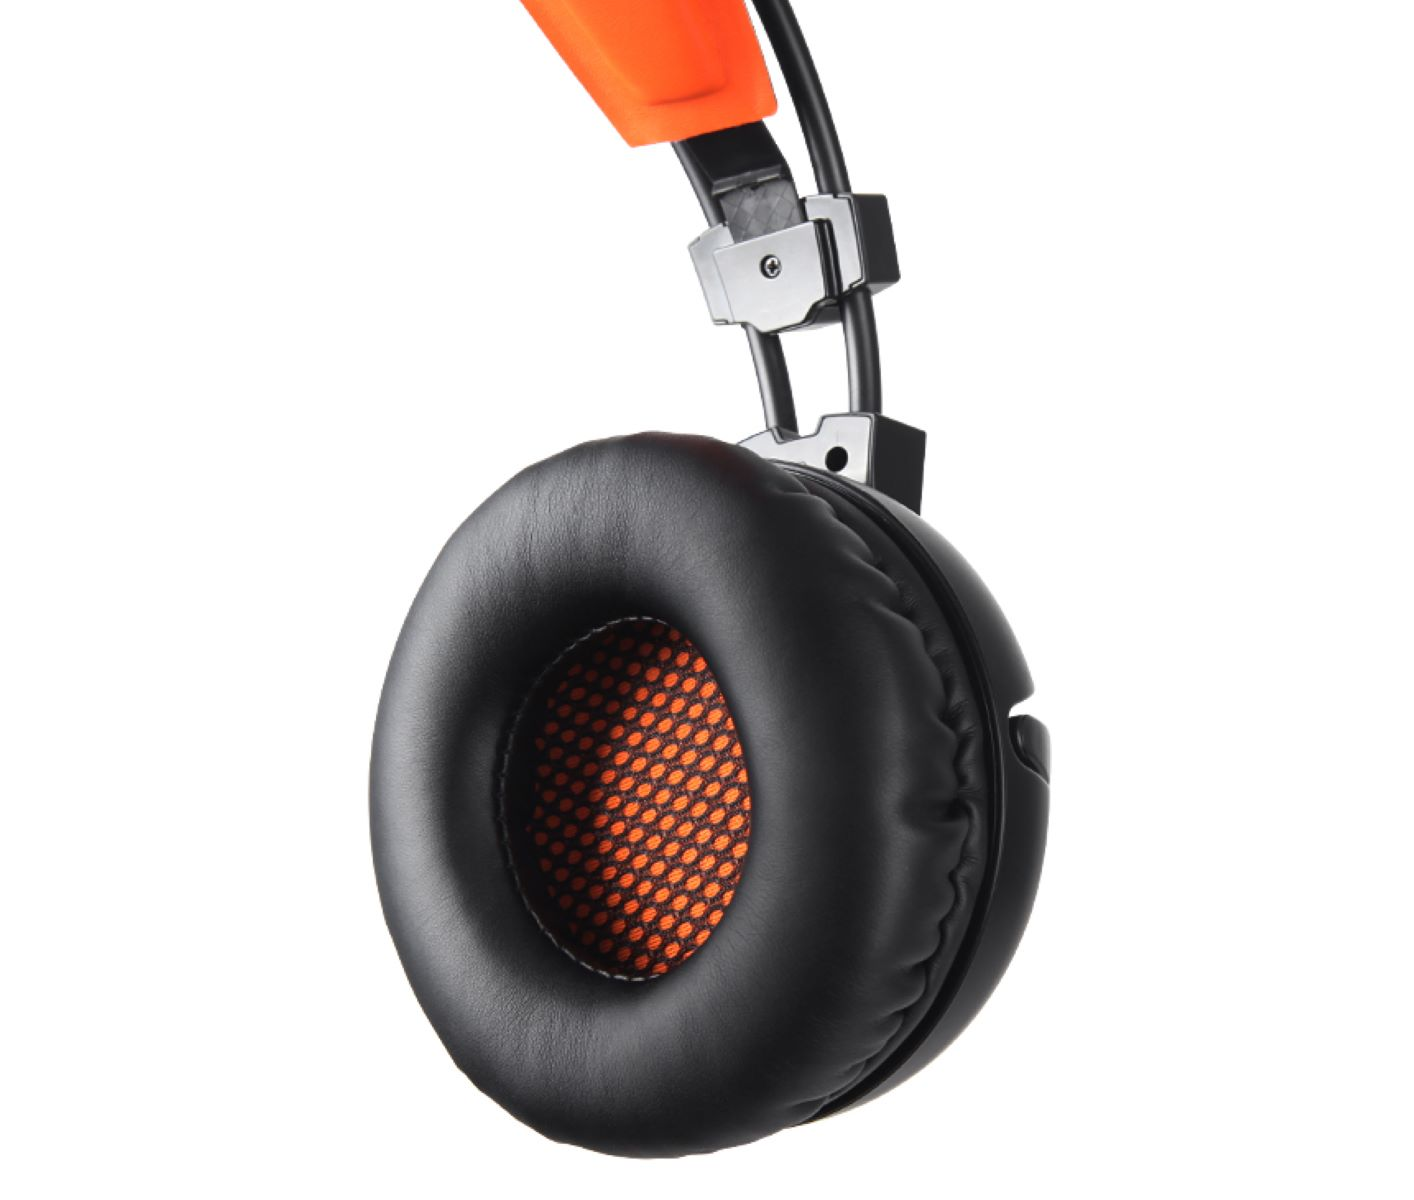 SADES A6, Over-ear Gaming Headset schwarz/orange